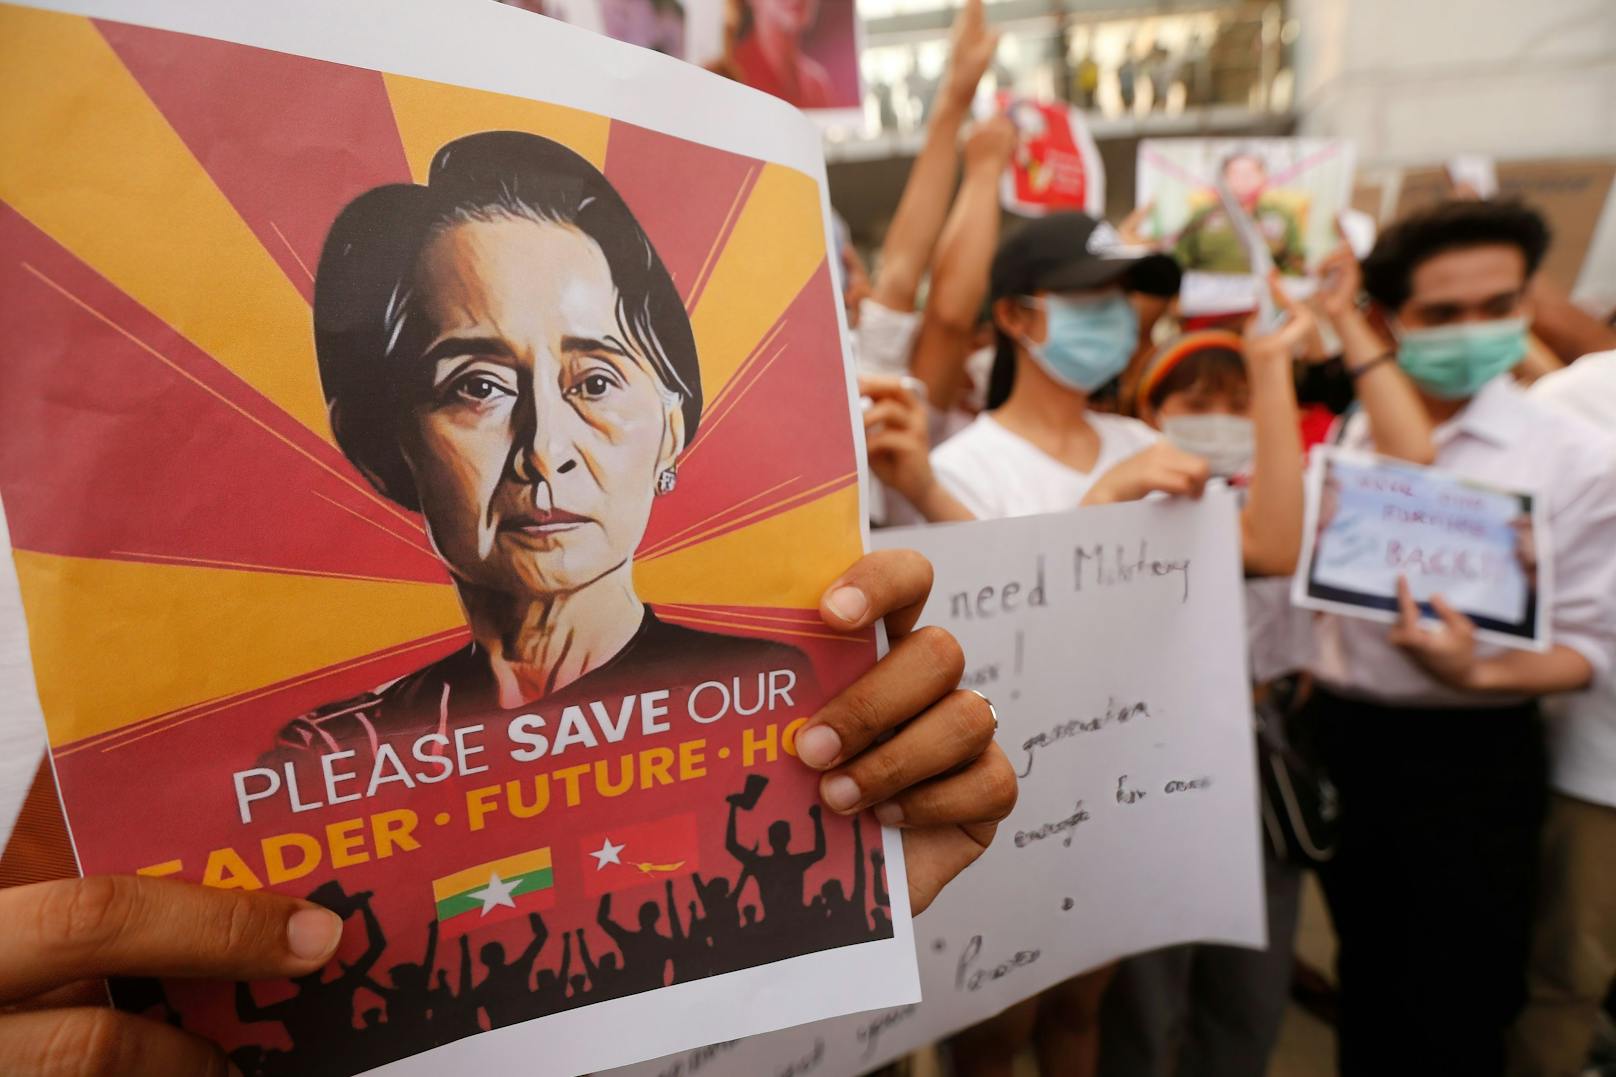 "Justiz hat langes Gedächtnis" – UNO warnt Myanmar